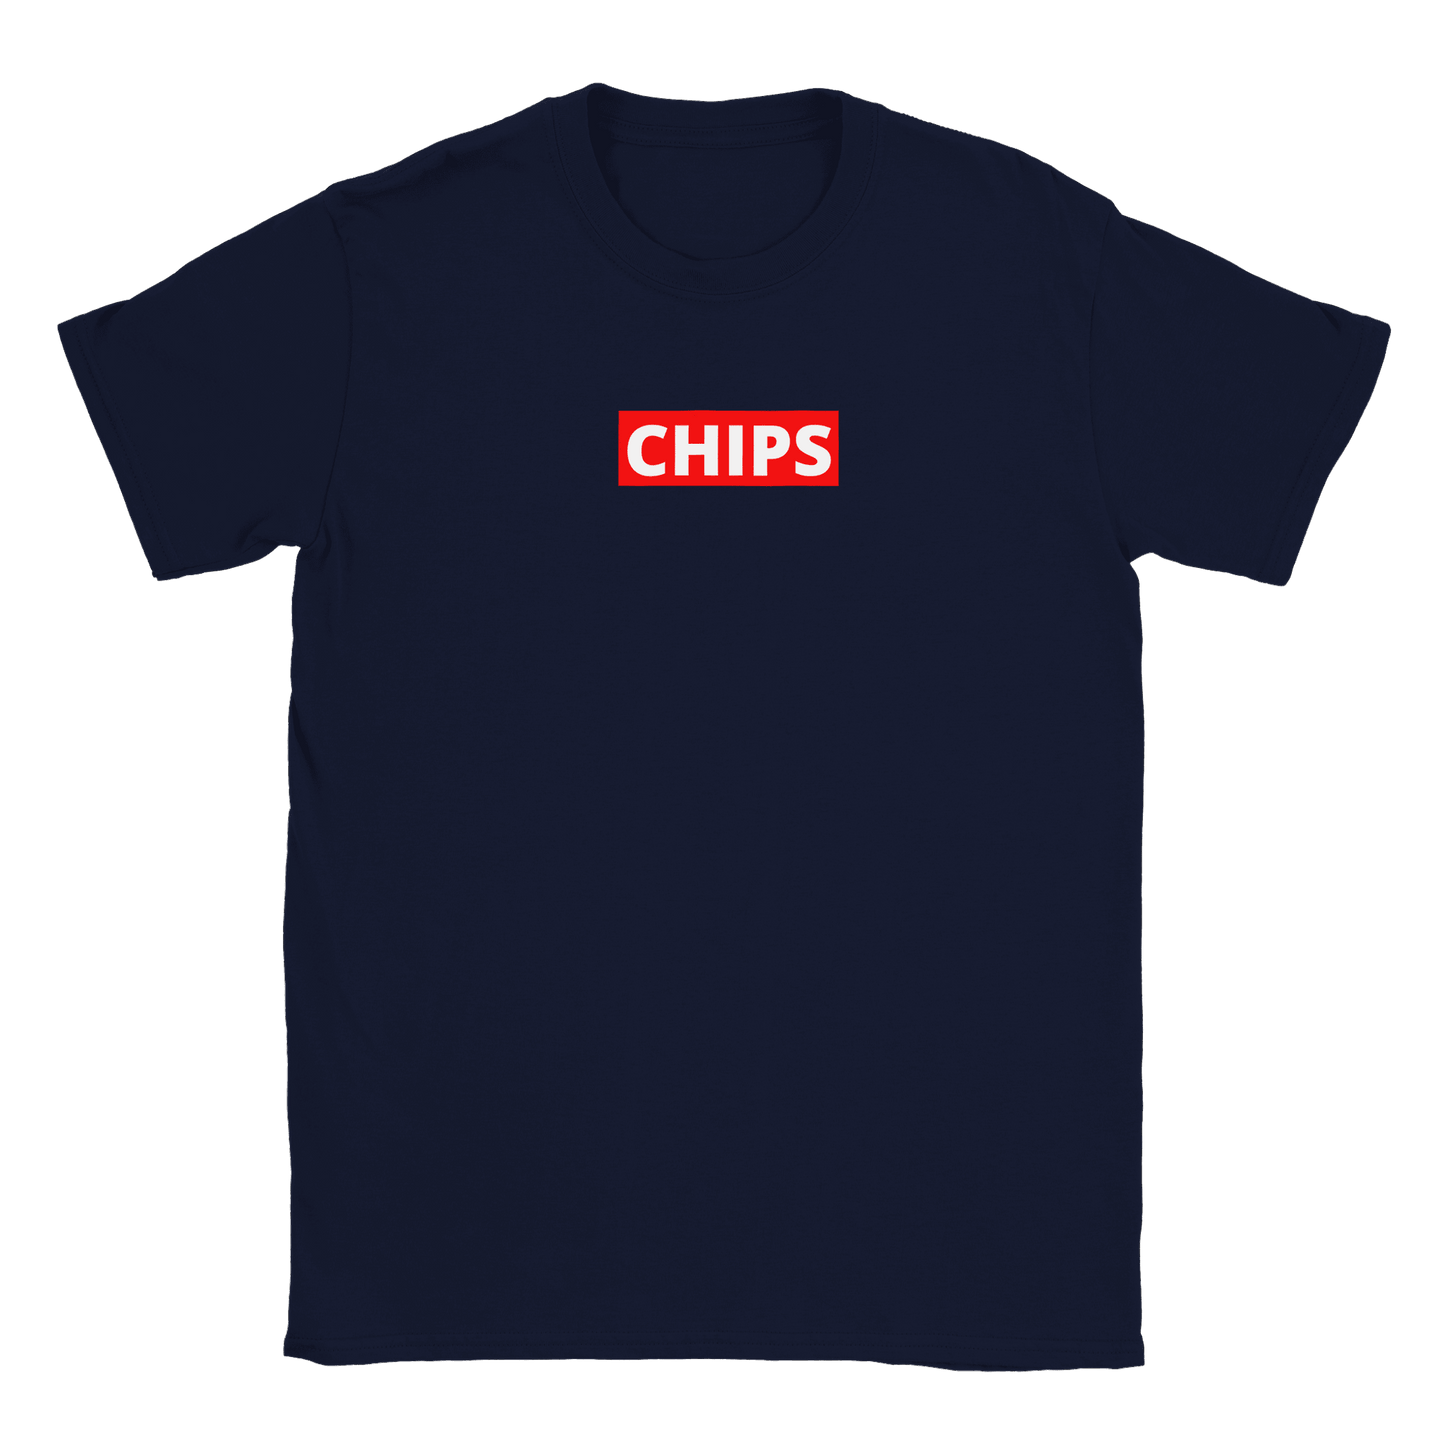 CHIPS - T-shirt Navy